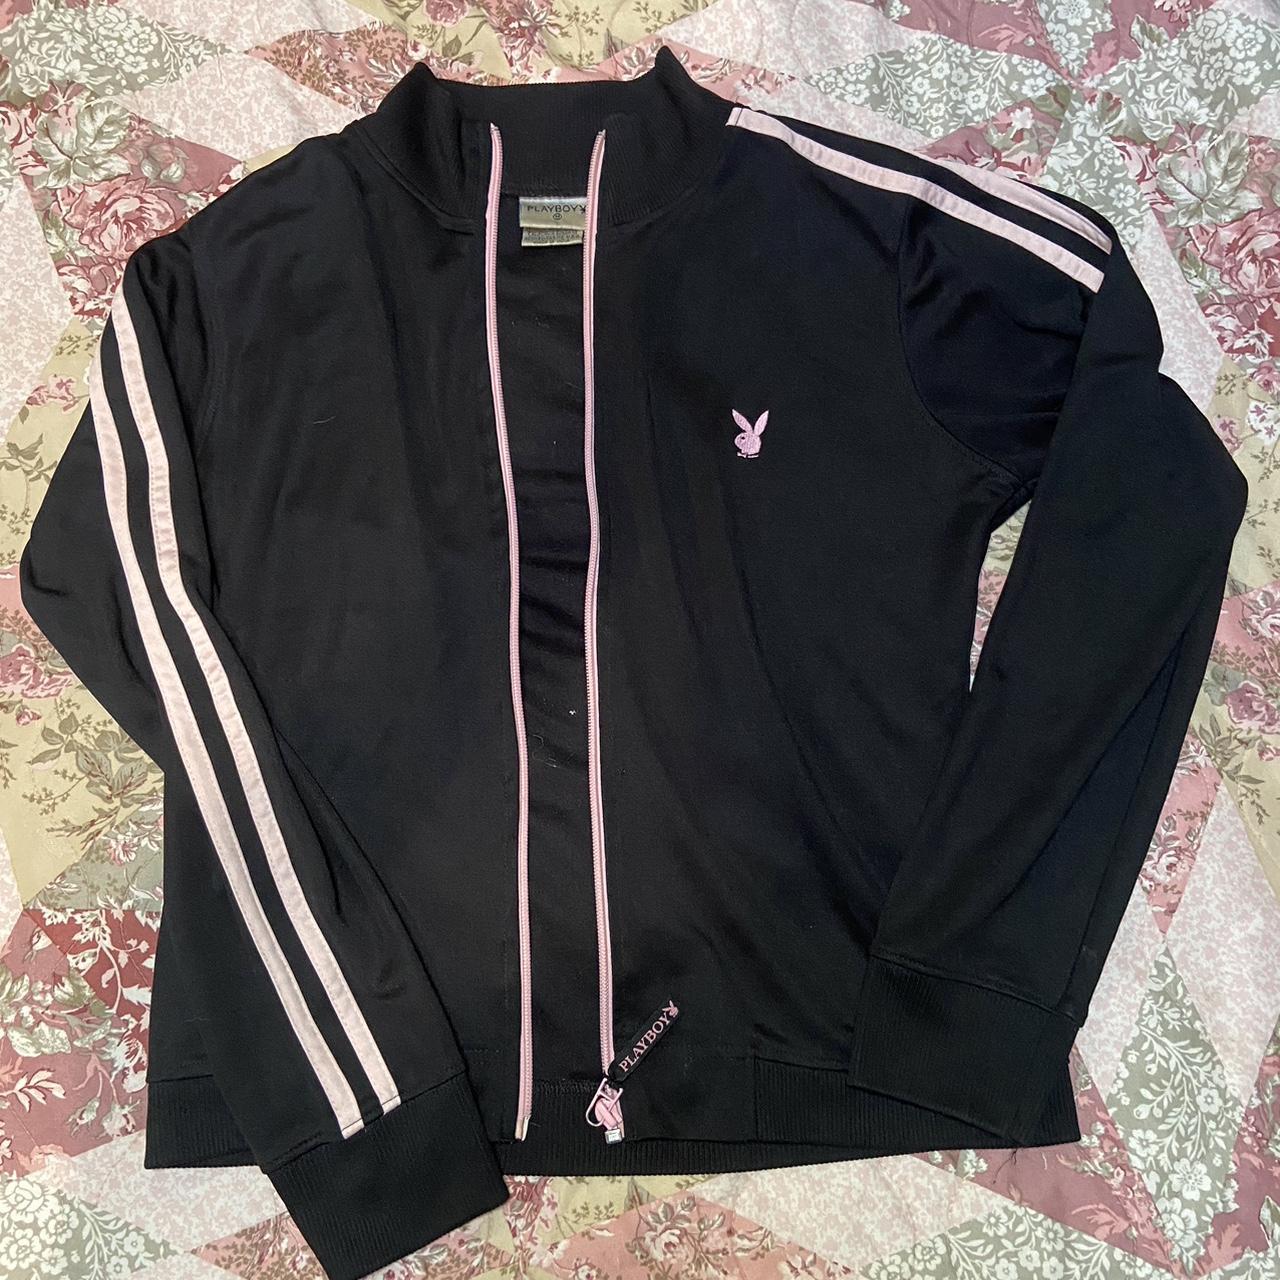 Playboy tracksuit jacket zip up black pink size medium - Depop